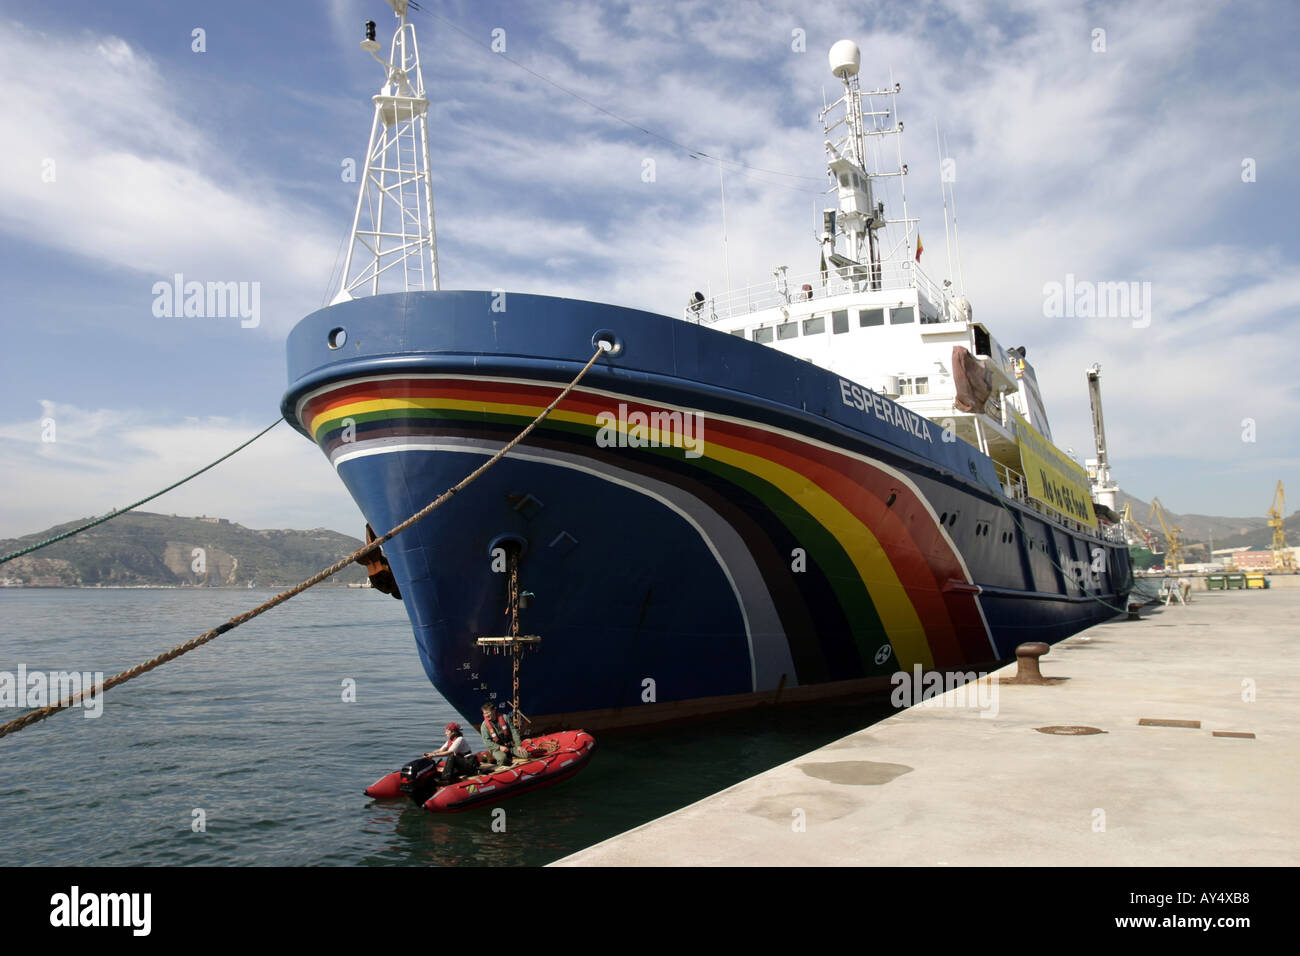 Greenpeace ship the Esperanza moored in Cartagena Spain Stock Photo